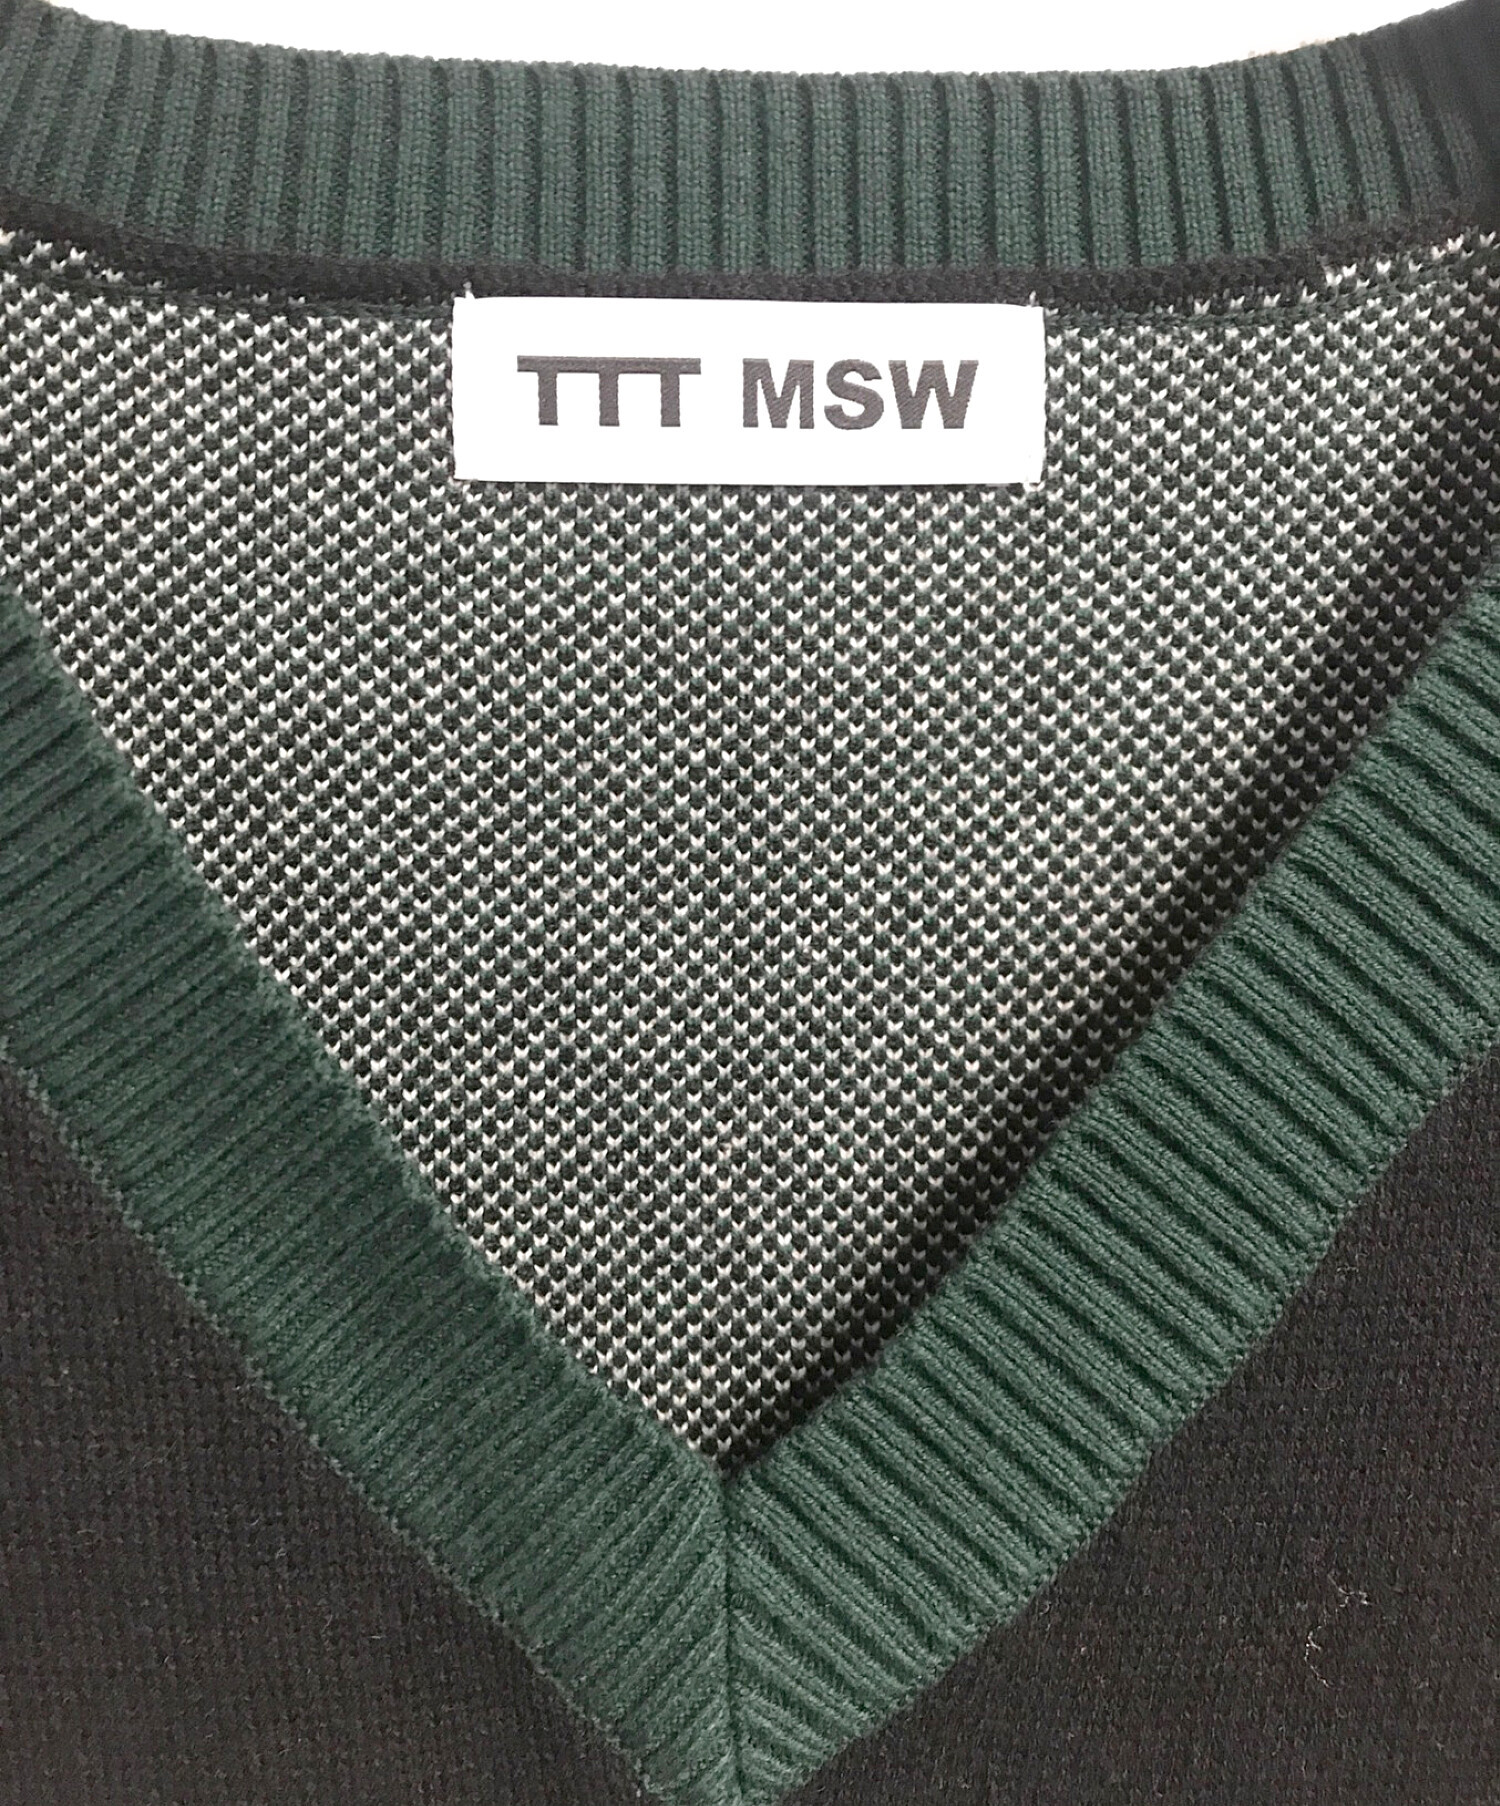 TTT MSW (ティーモダンストリートウェア) ニットベスト グリーン サイズ:L